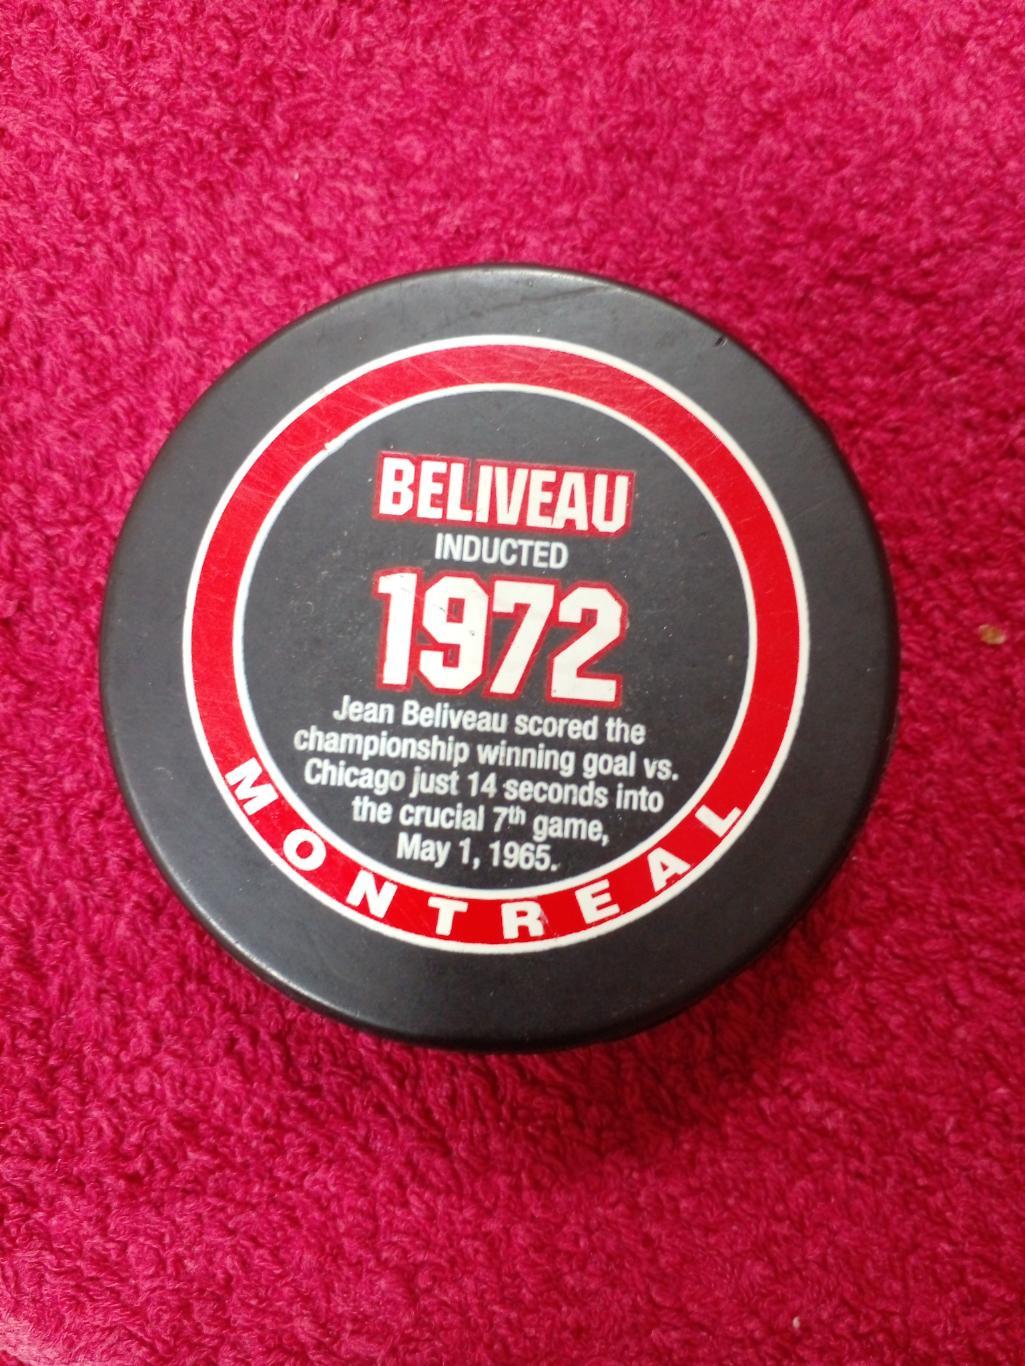 Шайба хоккейная раритетная JEAN BELIVEAU 1972 made in Canada